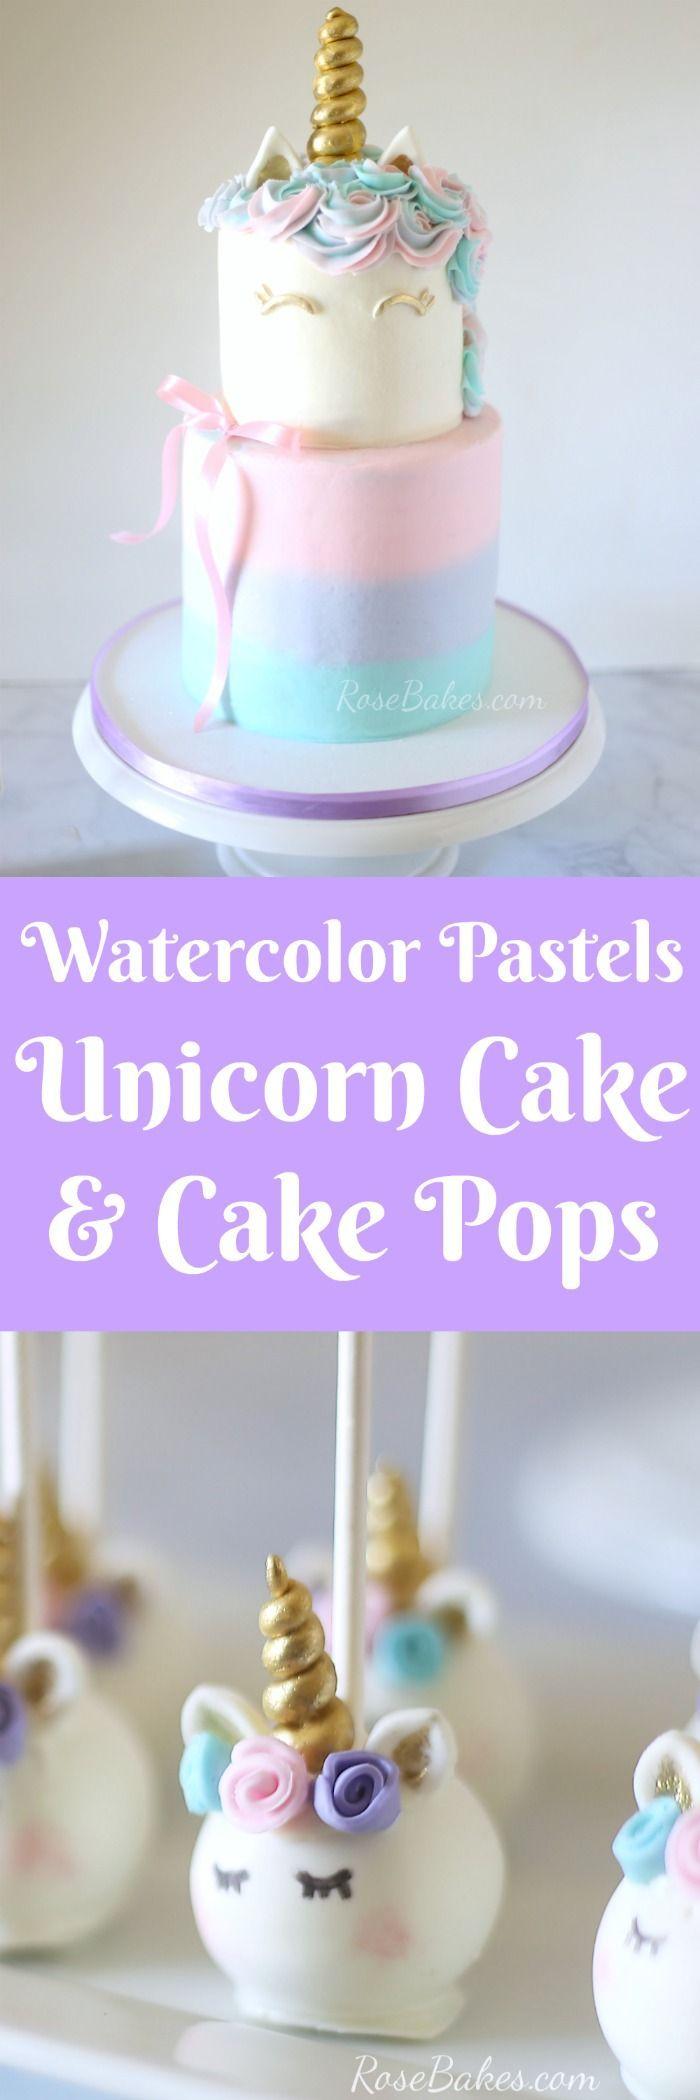 Wedding - Pastel Watercolors Unicorn Cake And Unicorn Cake Pops